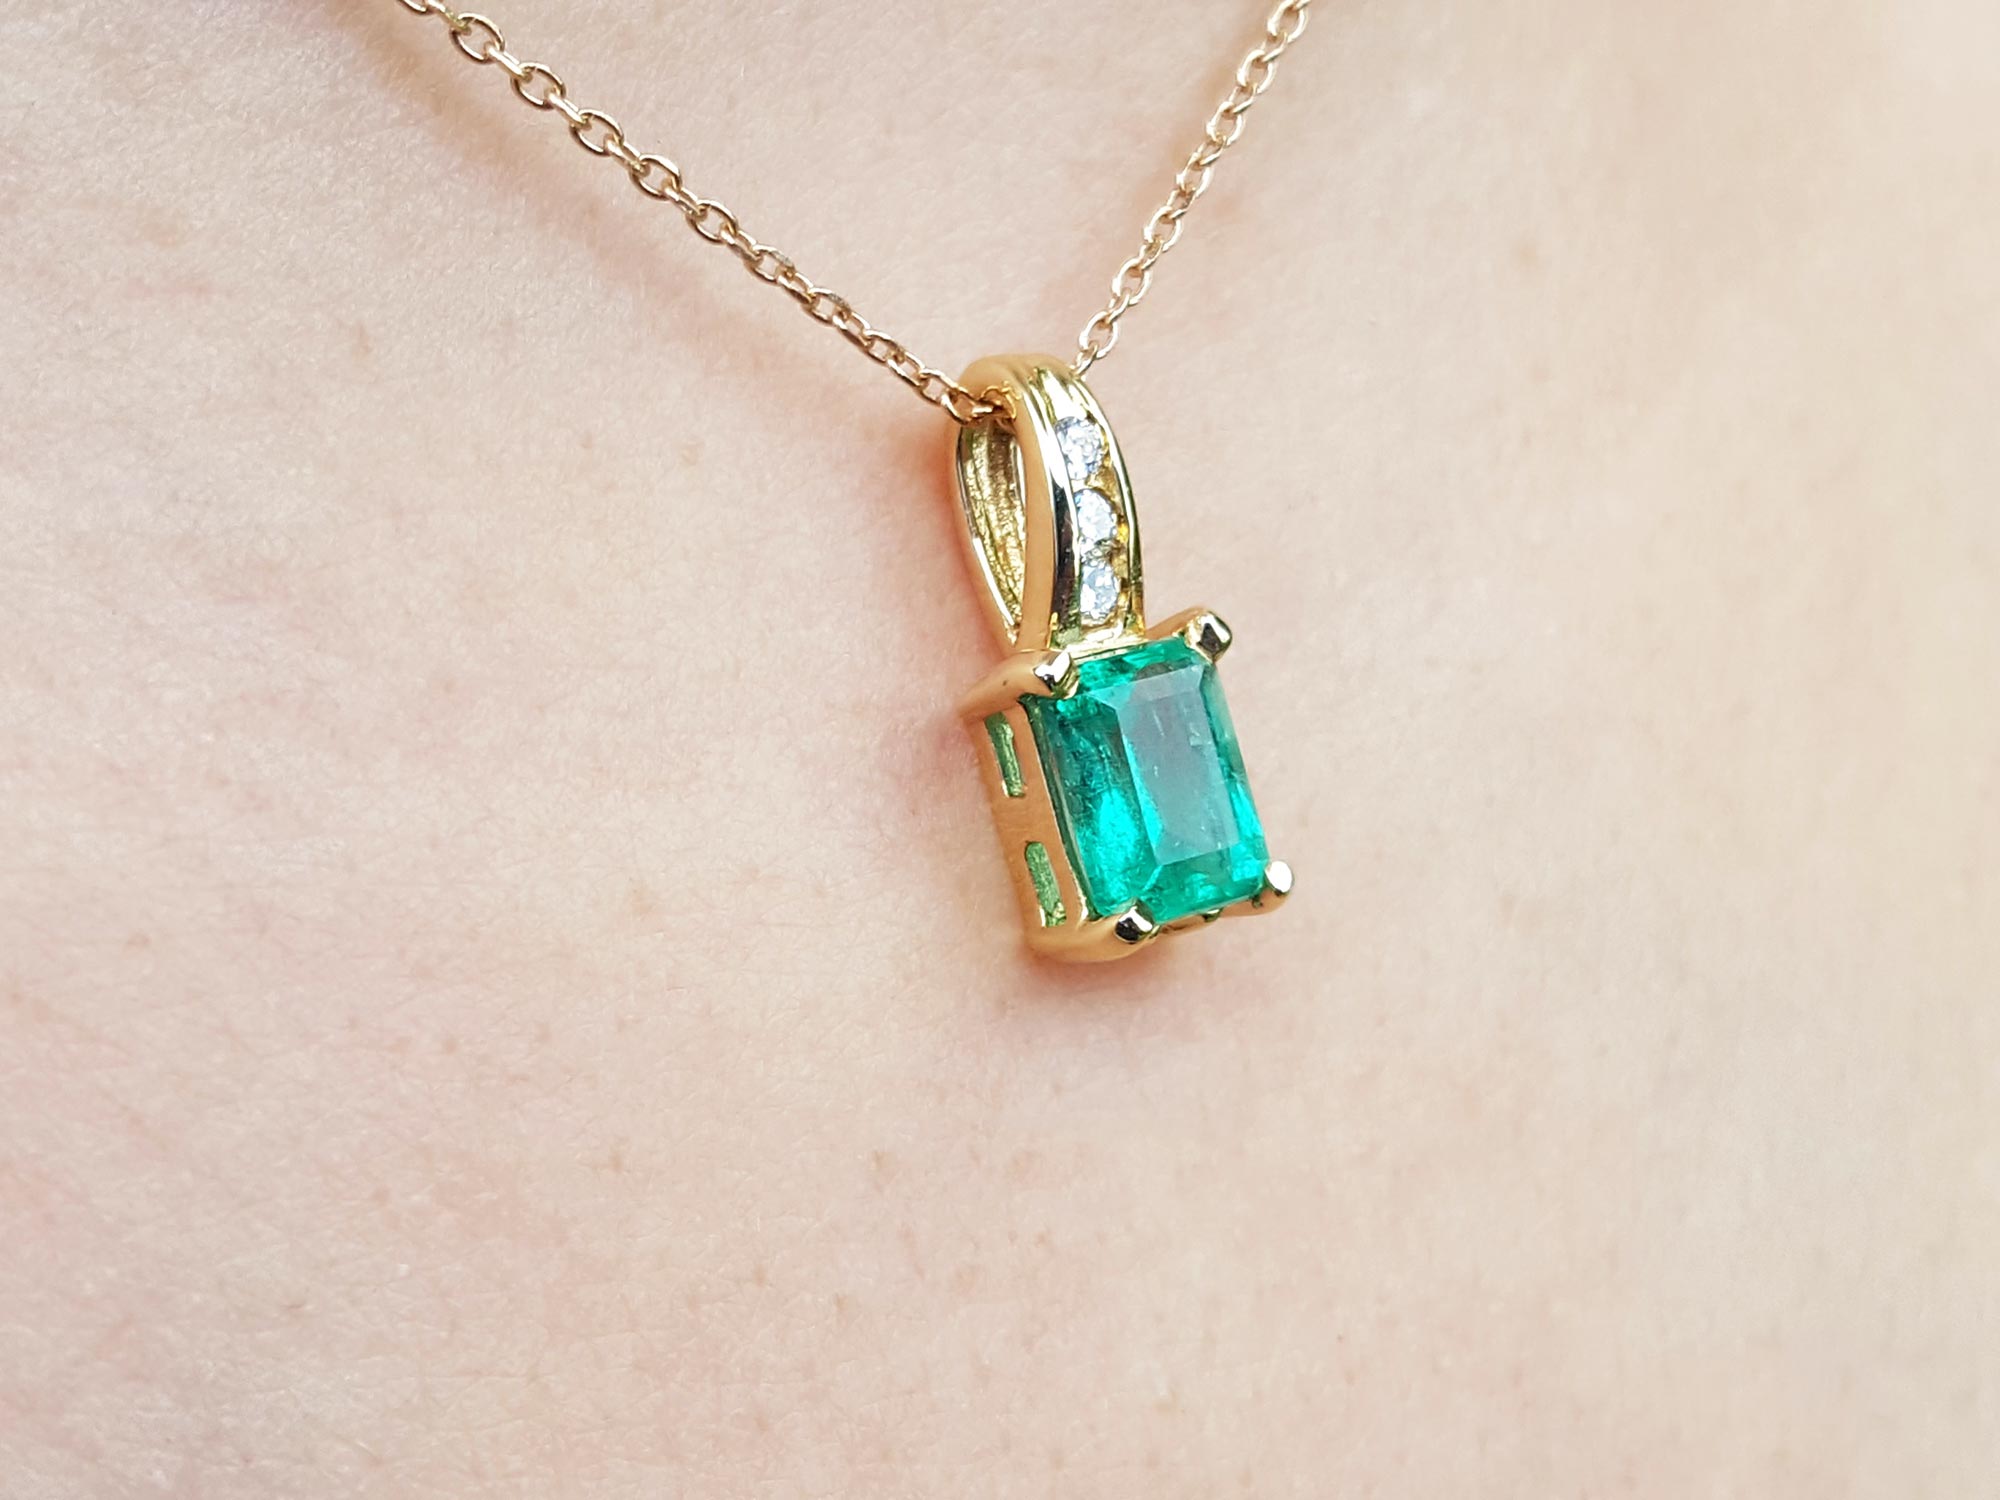 14k emerald pendant and earrings